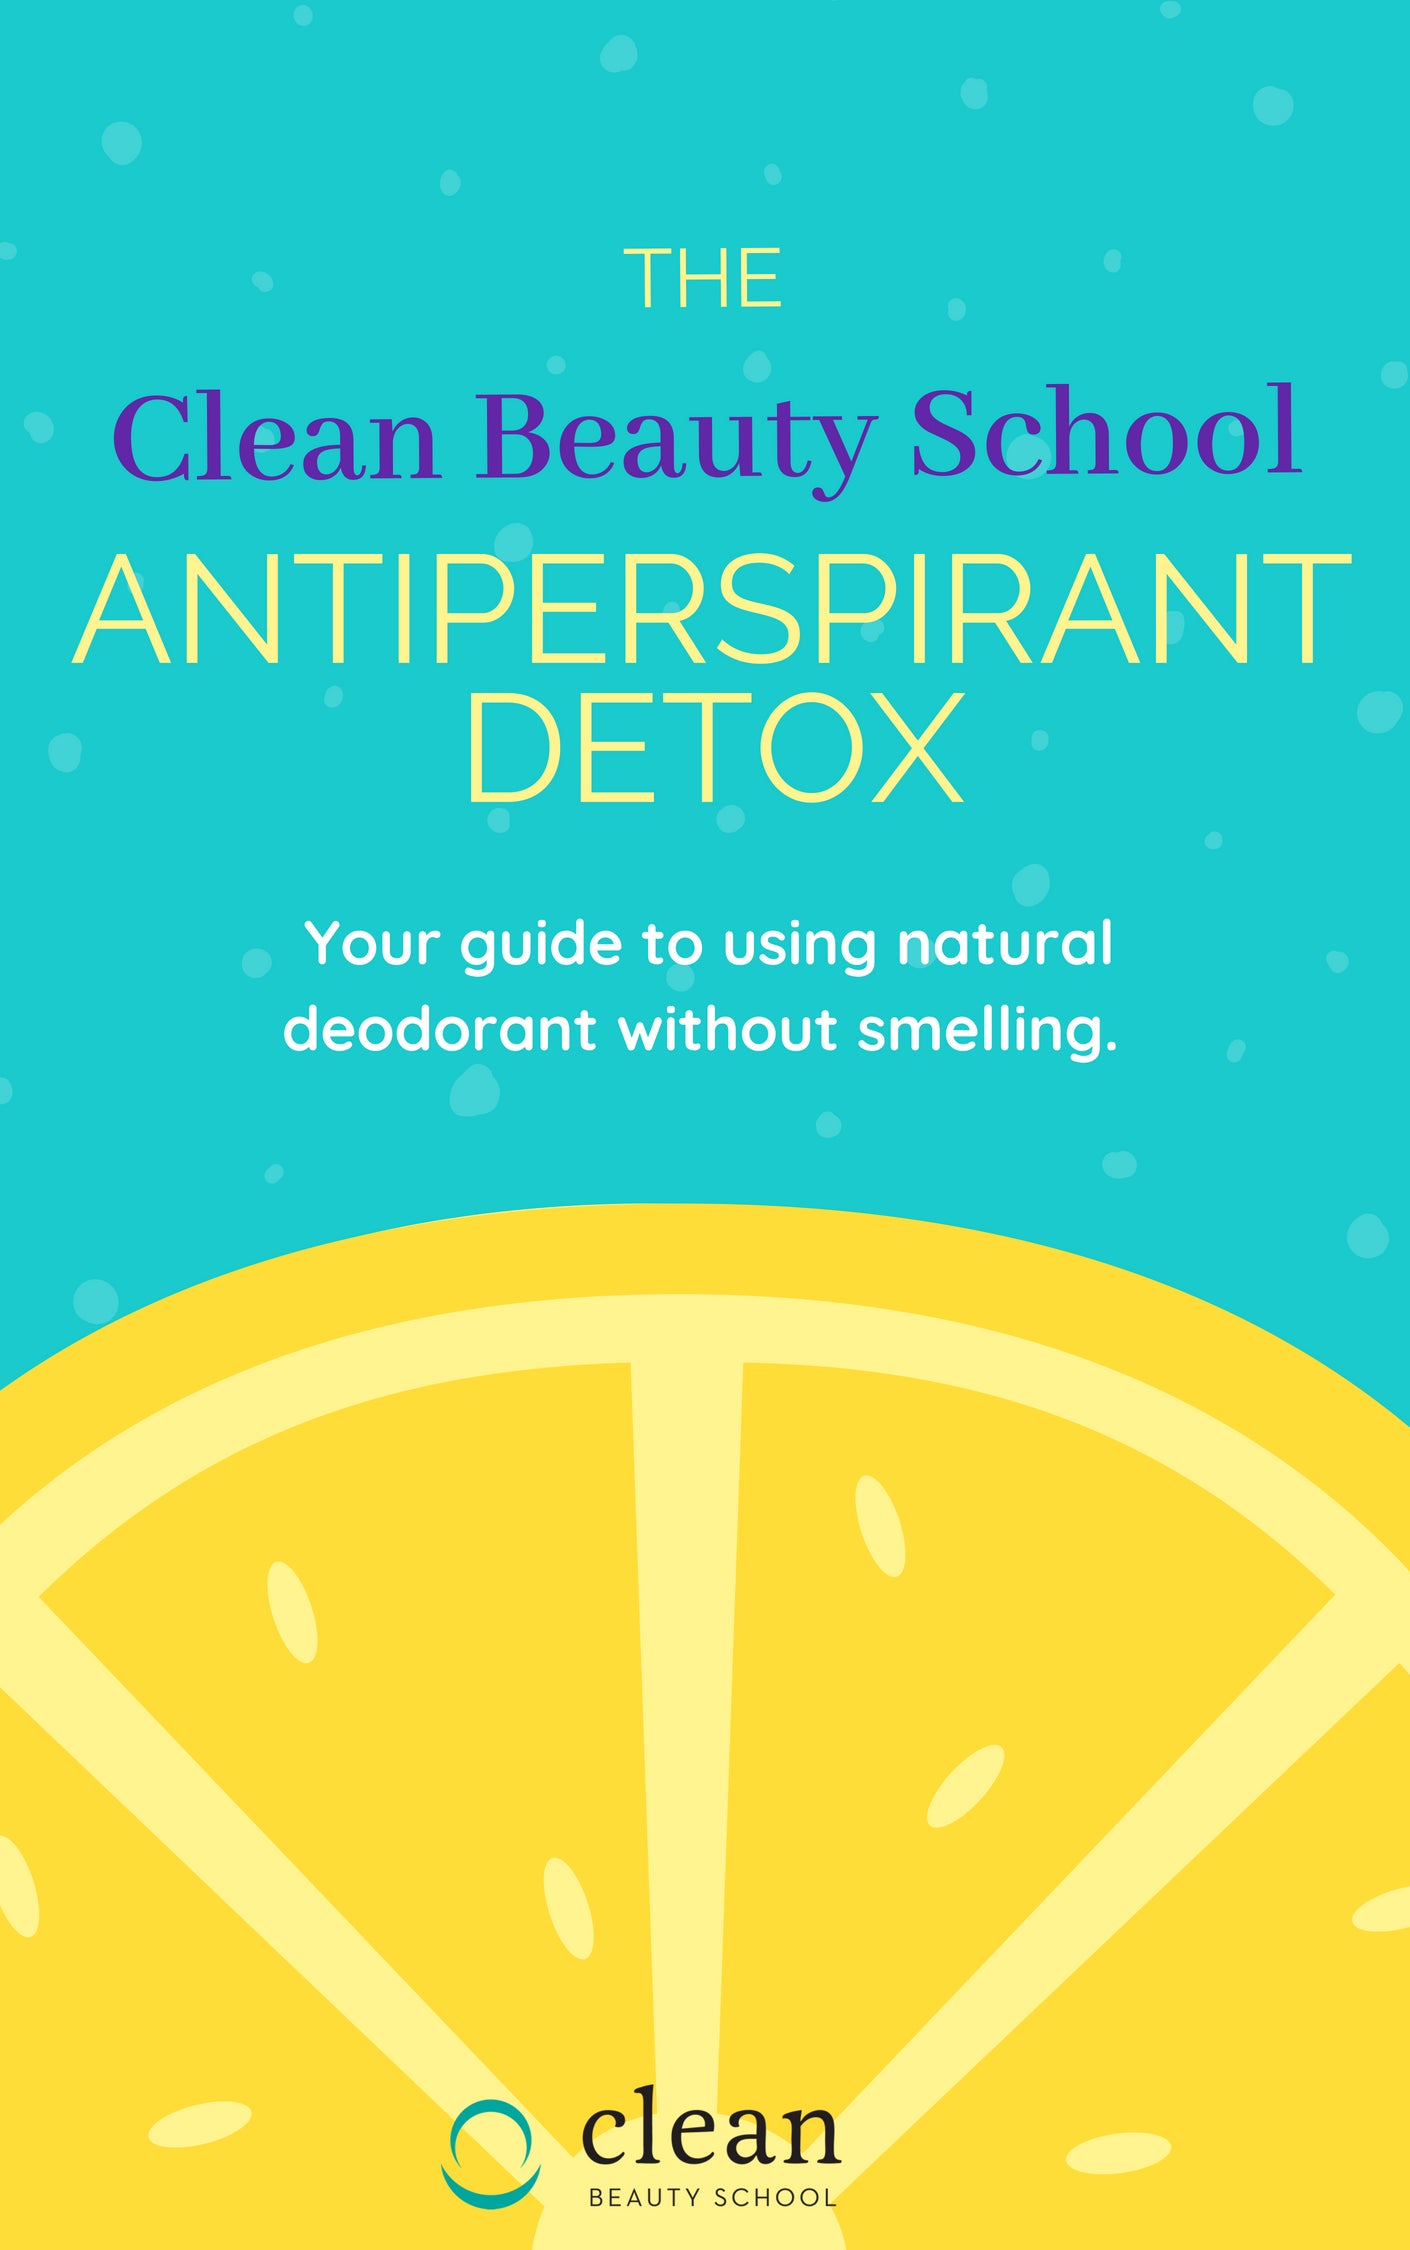 The Antiperspirant Detox Guide